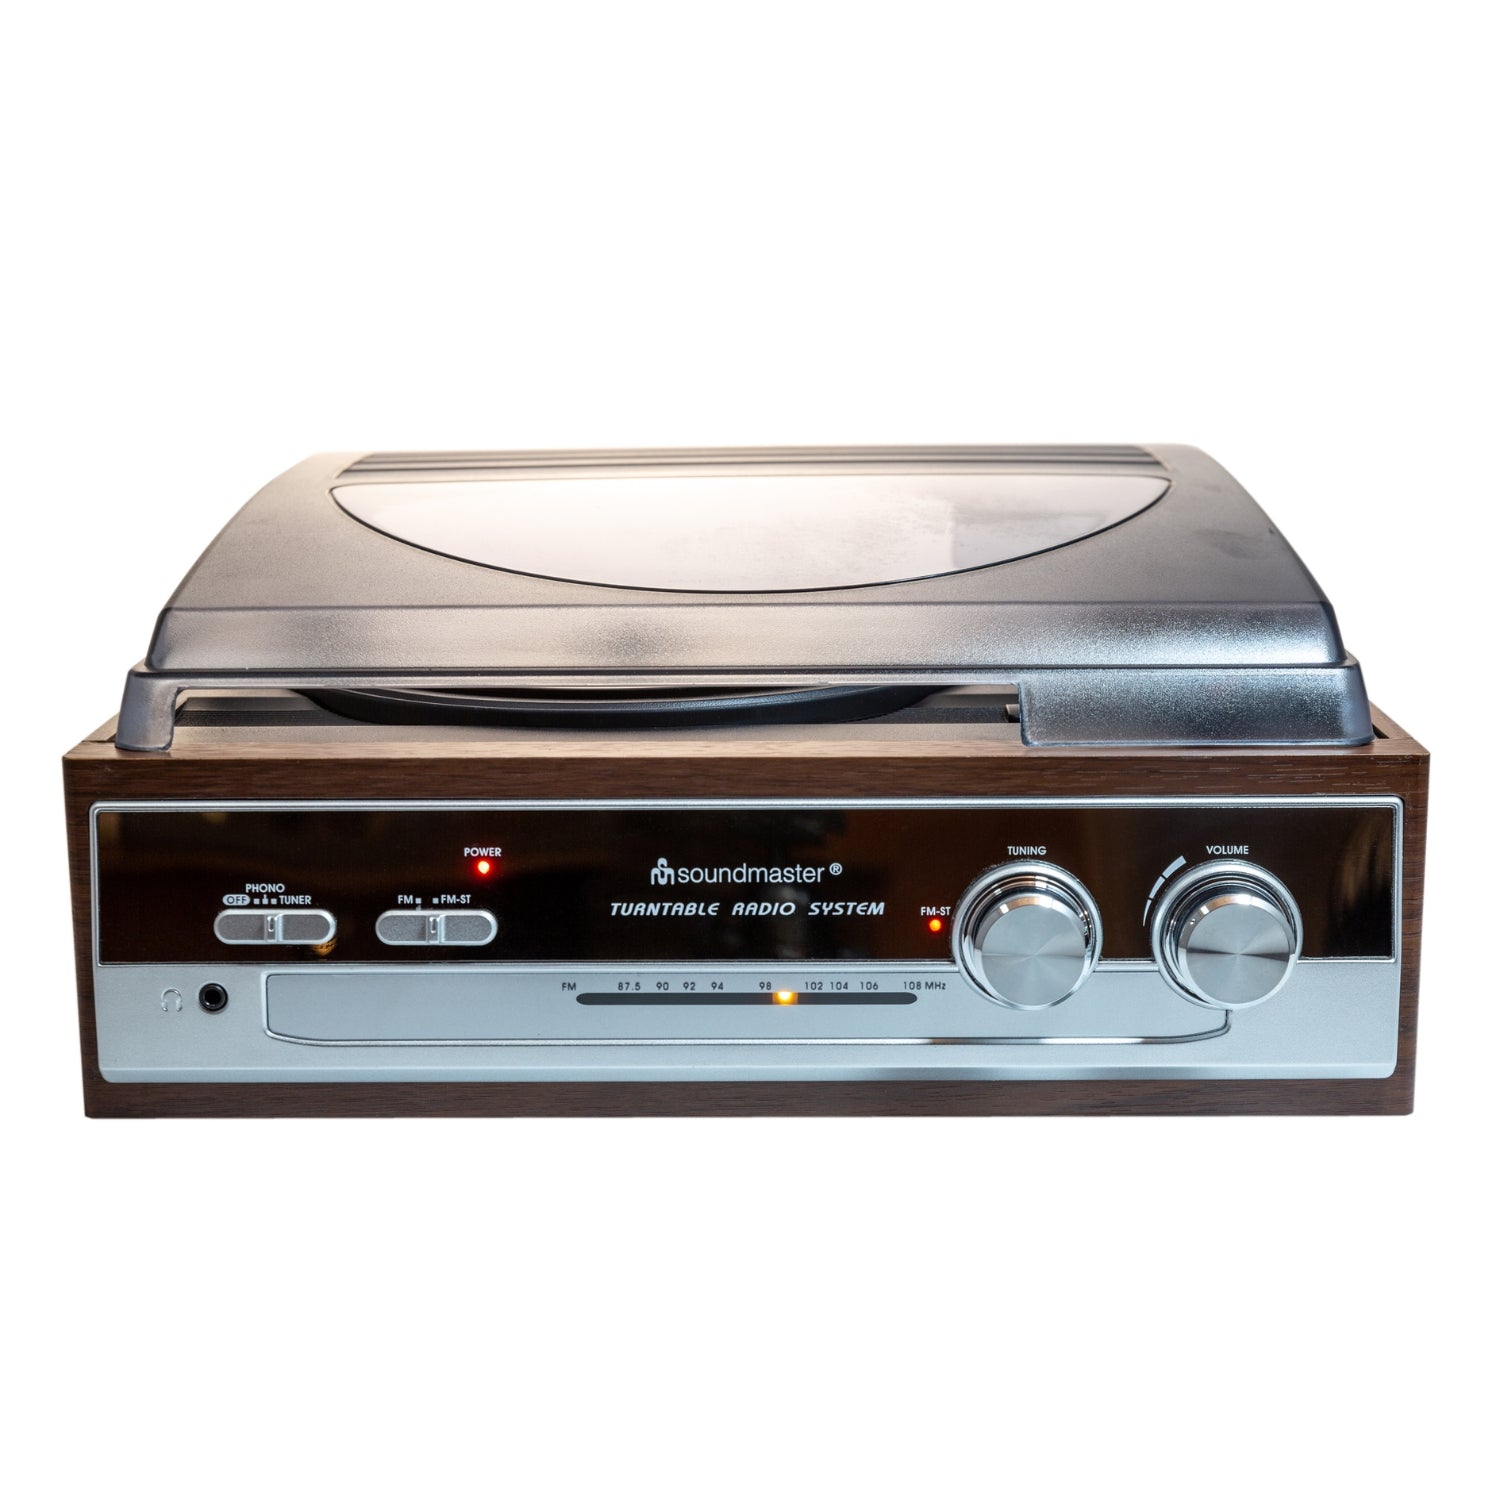 Soundmaster PL186H turntable radio built-in speakers headphone jack retro nostalgia